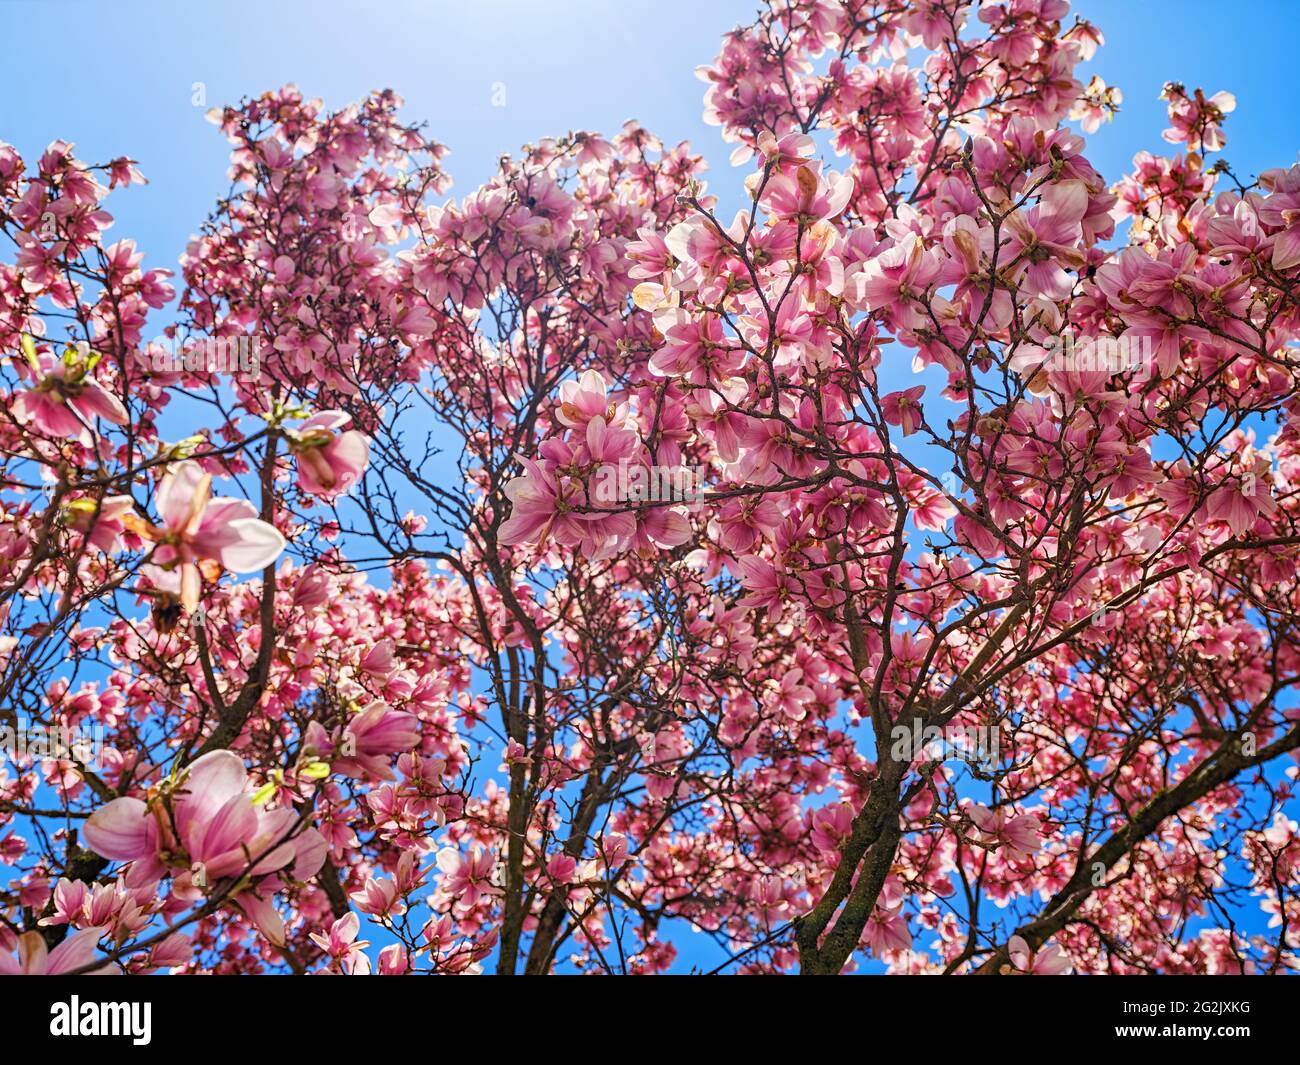 Magnolia tree, magnolia, blooming magnolia tree, blooming magnolia, sunny, blue sky, blossoms, tree, branches Stock Photo